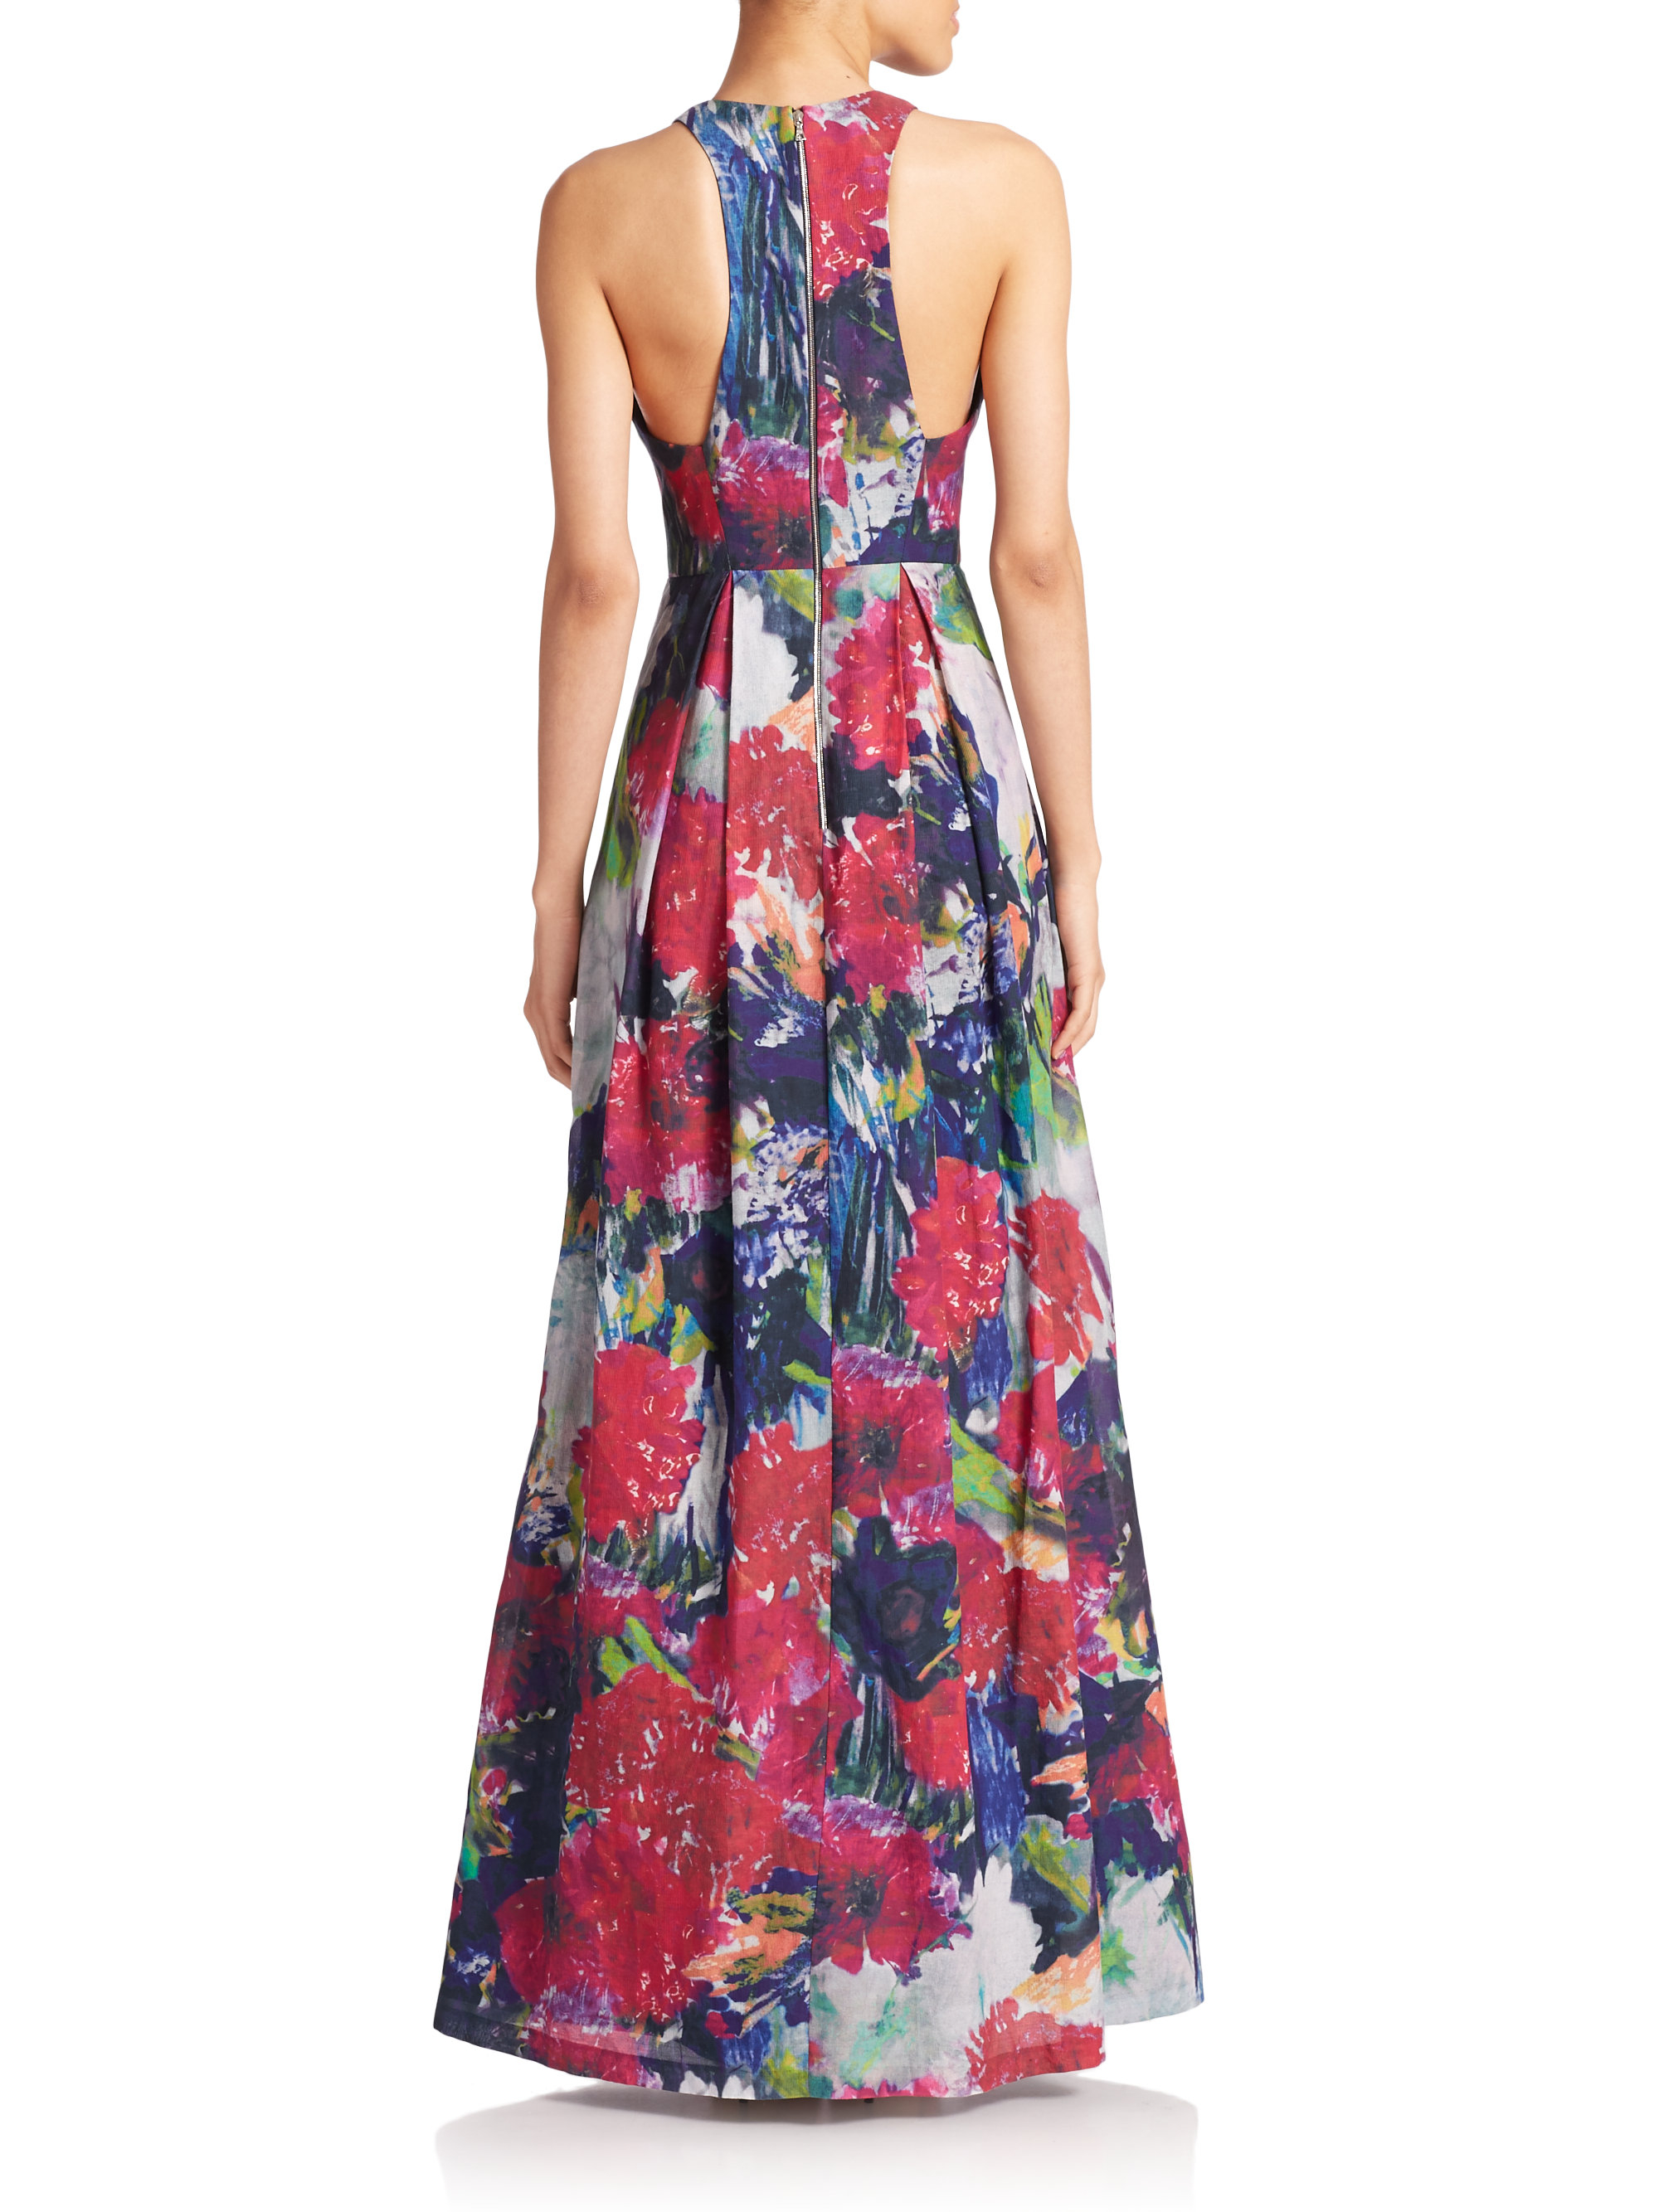 Lyst - Phoebe Floral Silk/Cotton Maxi Dress